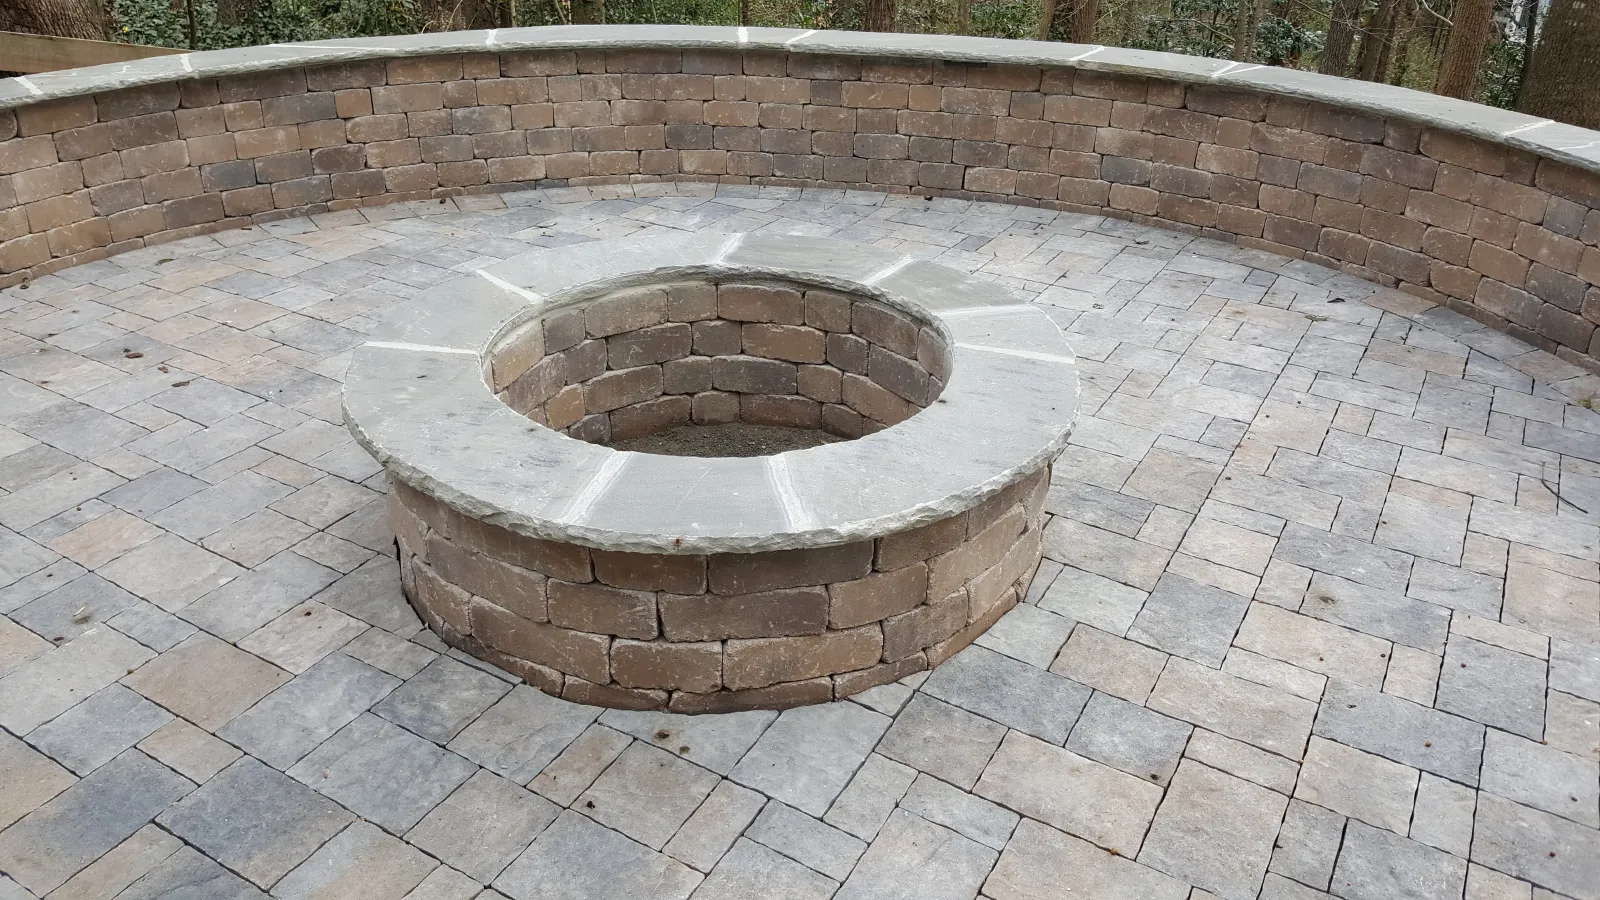 a circular object on a brick surface